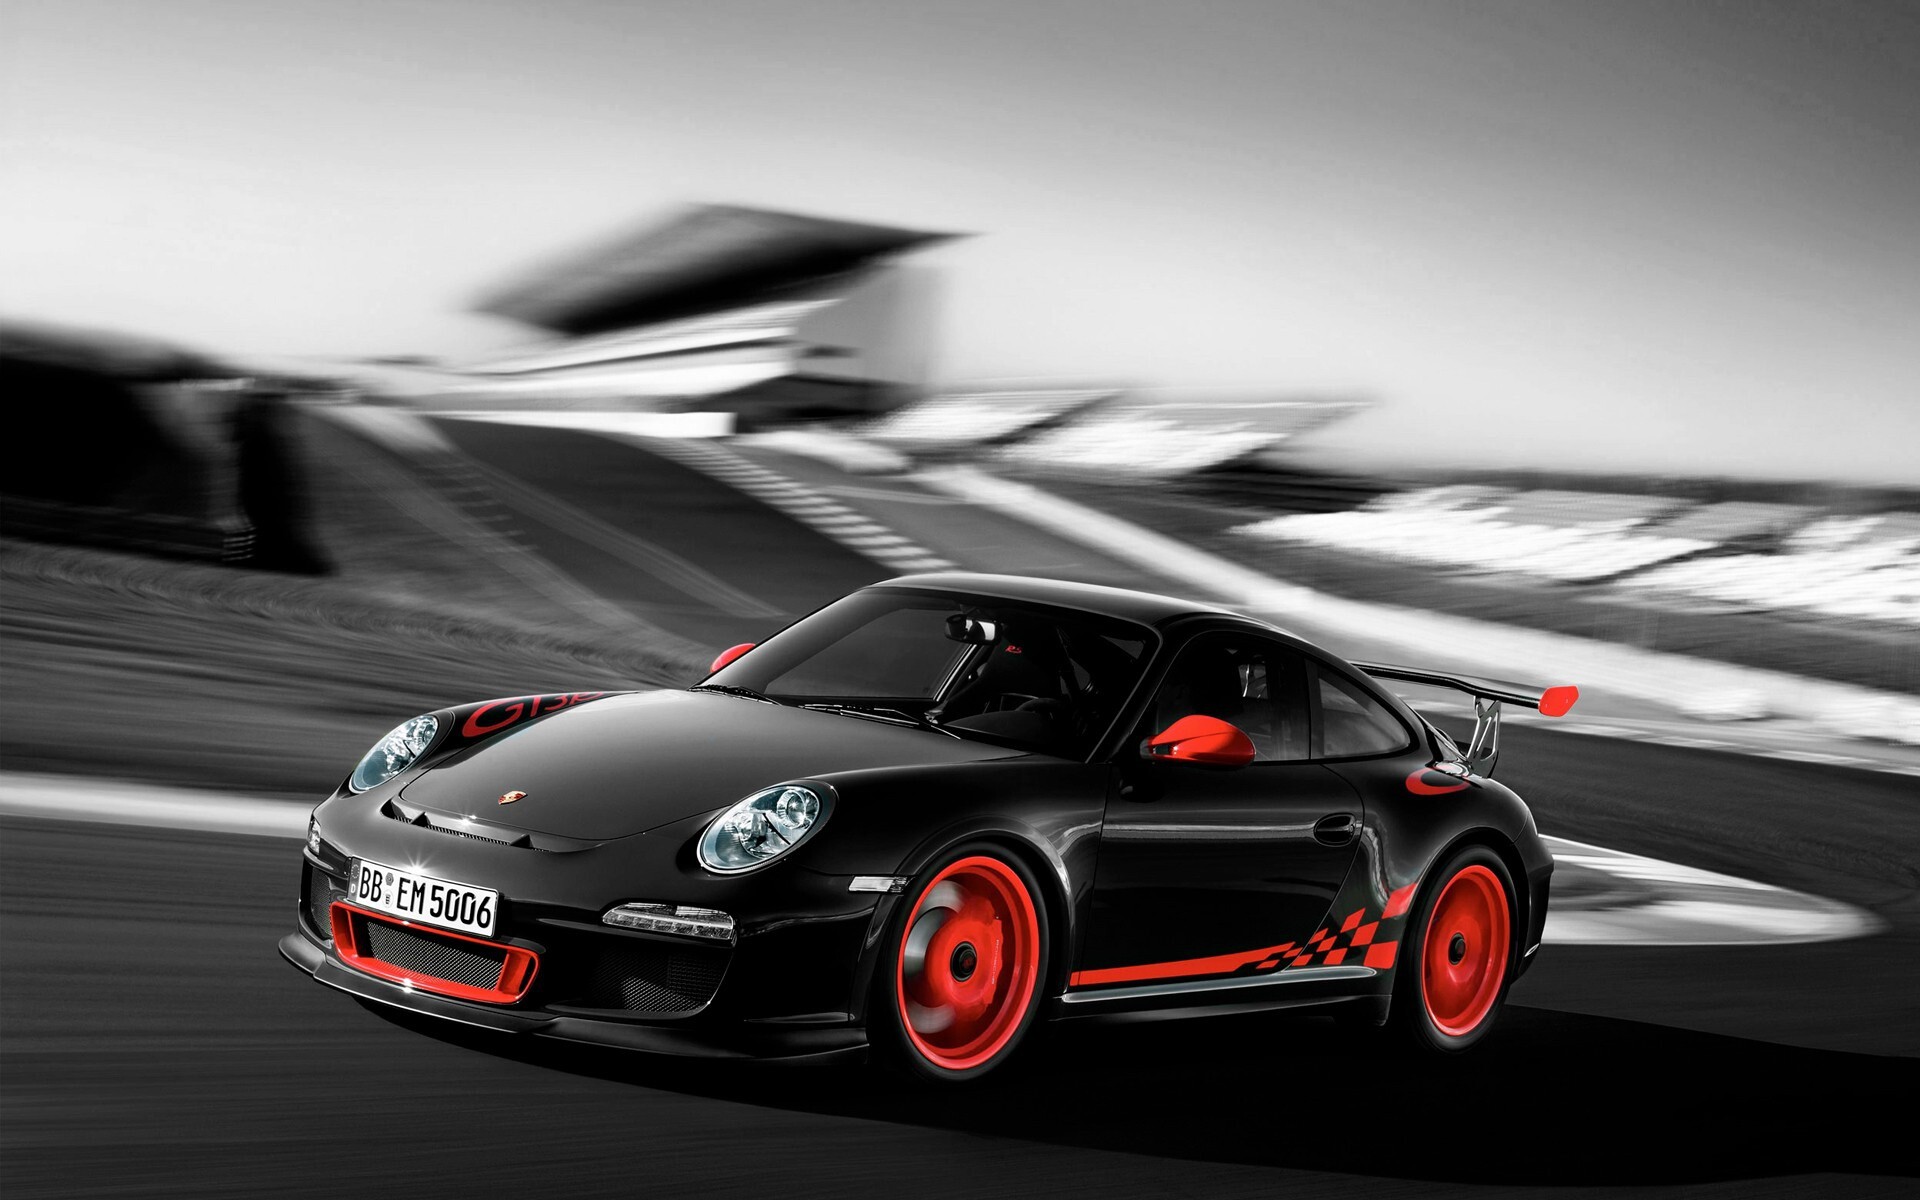 Porsche GT3 RS, Black and orange elegance, Aggressive allure, Track-ready power, 1920x1200 HD Desktop